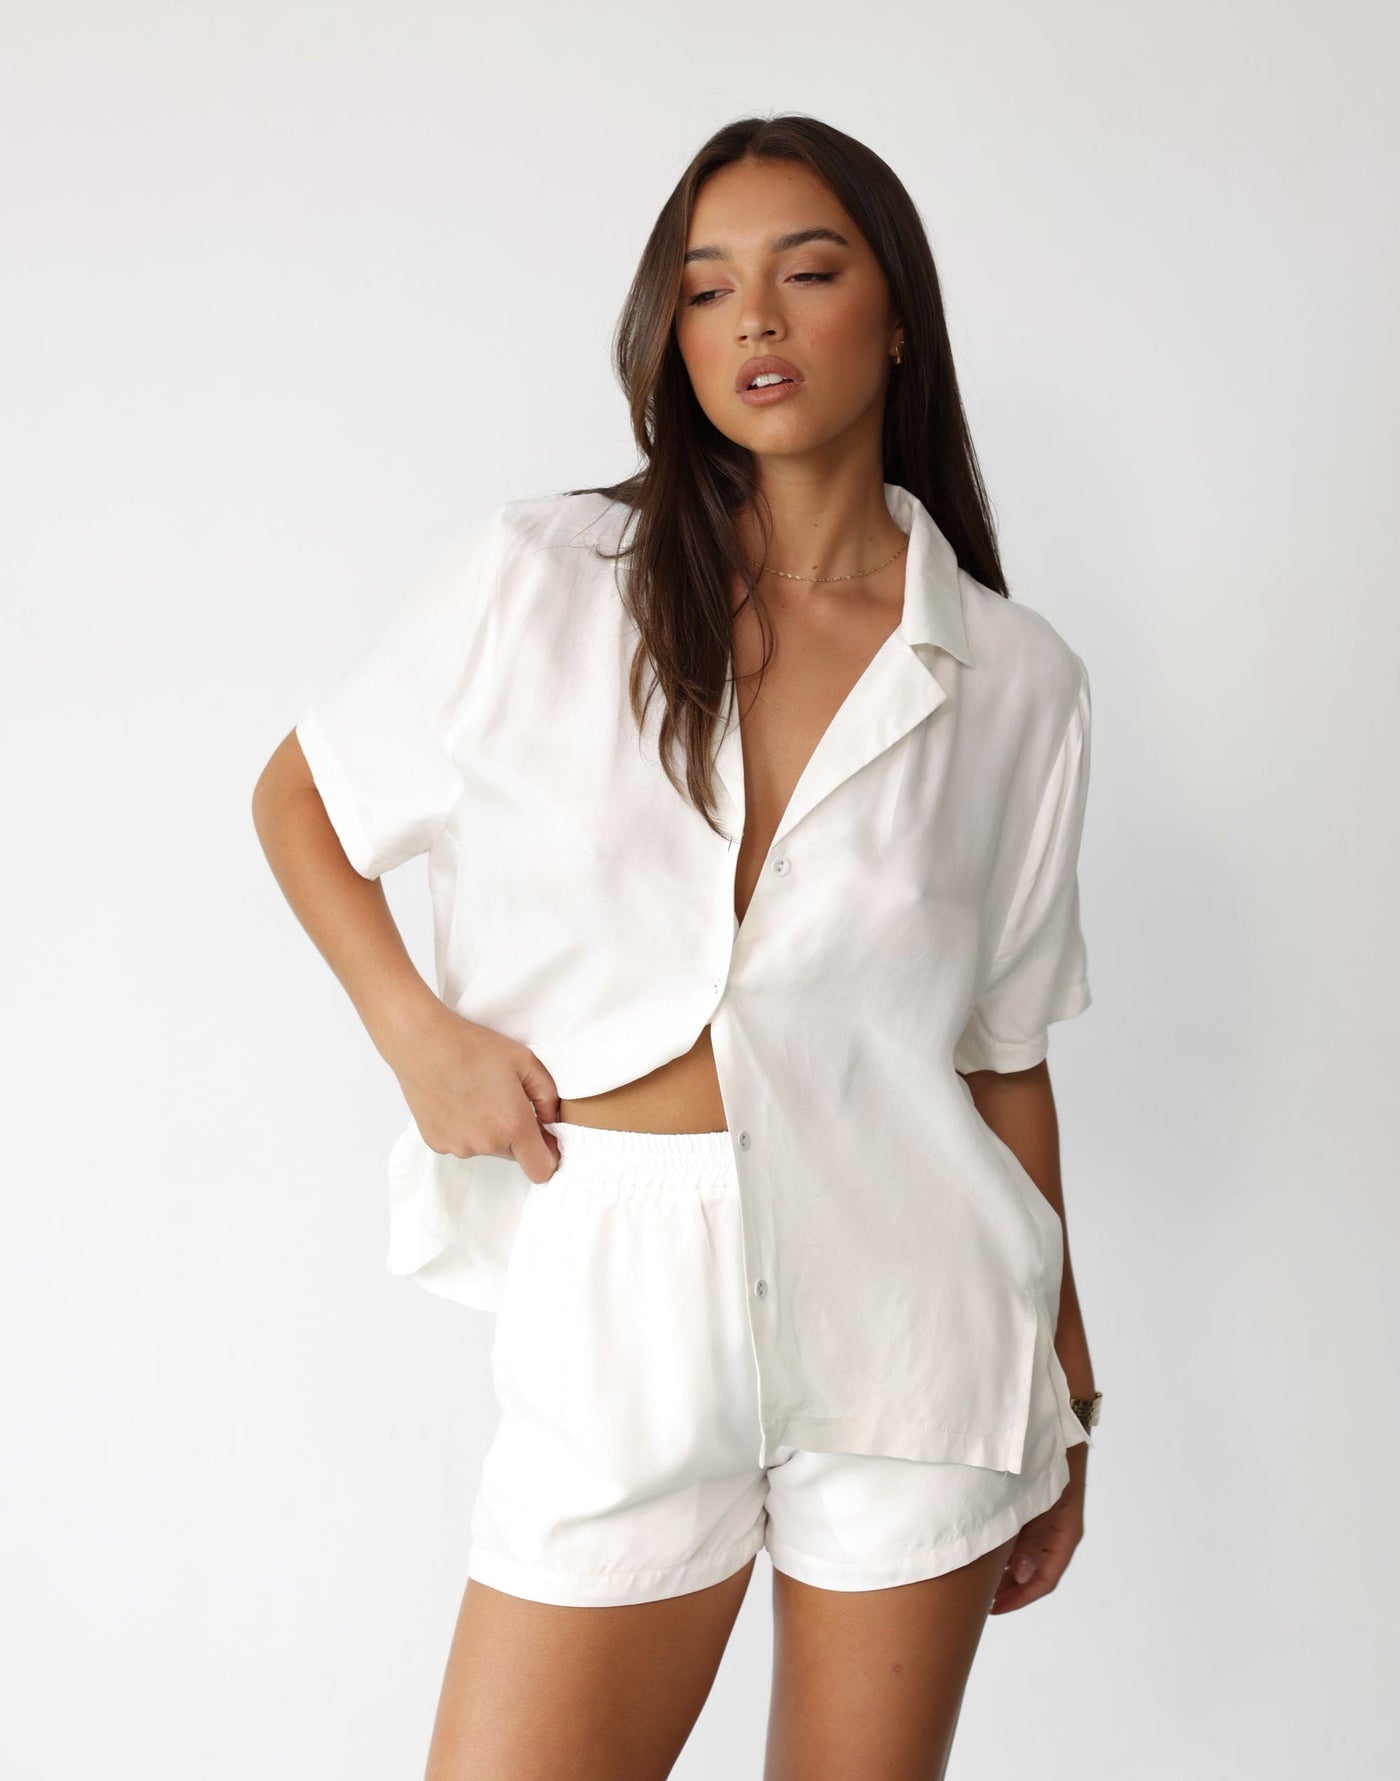 Minni Shirt (White) - Cupro Button Closure Relaxed Shirt - Women's Top - Charcoal Clothing